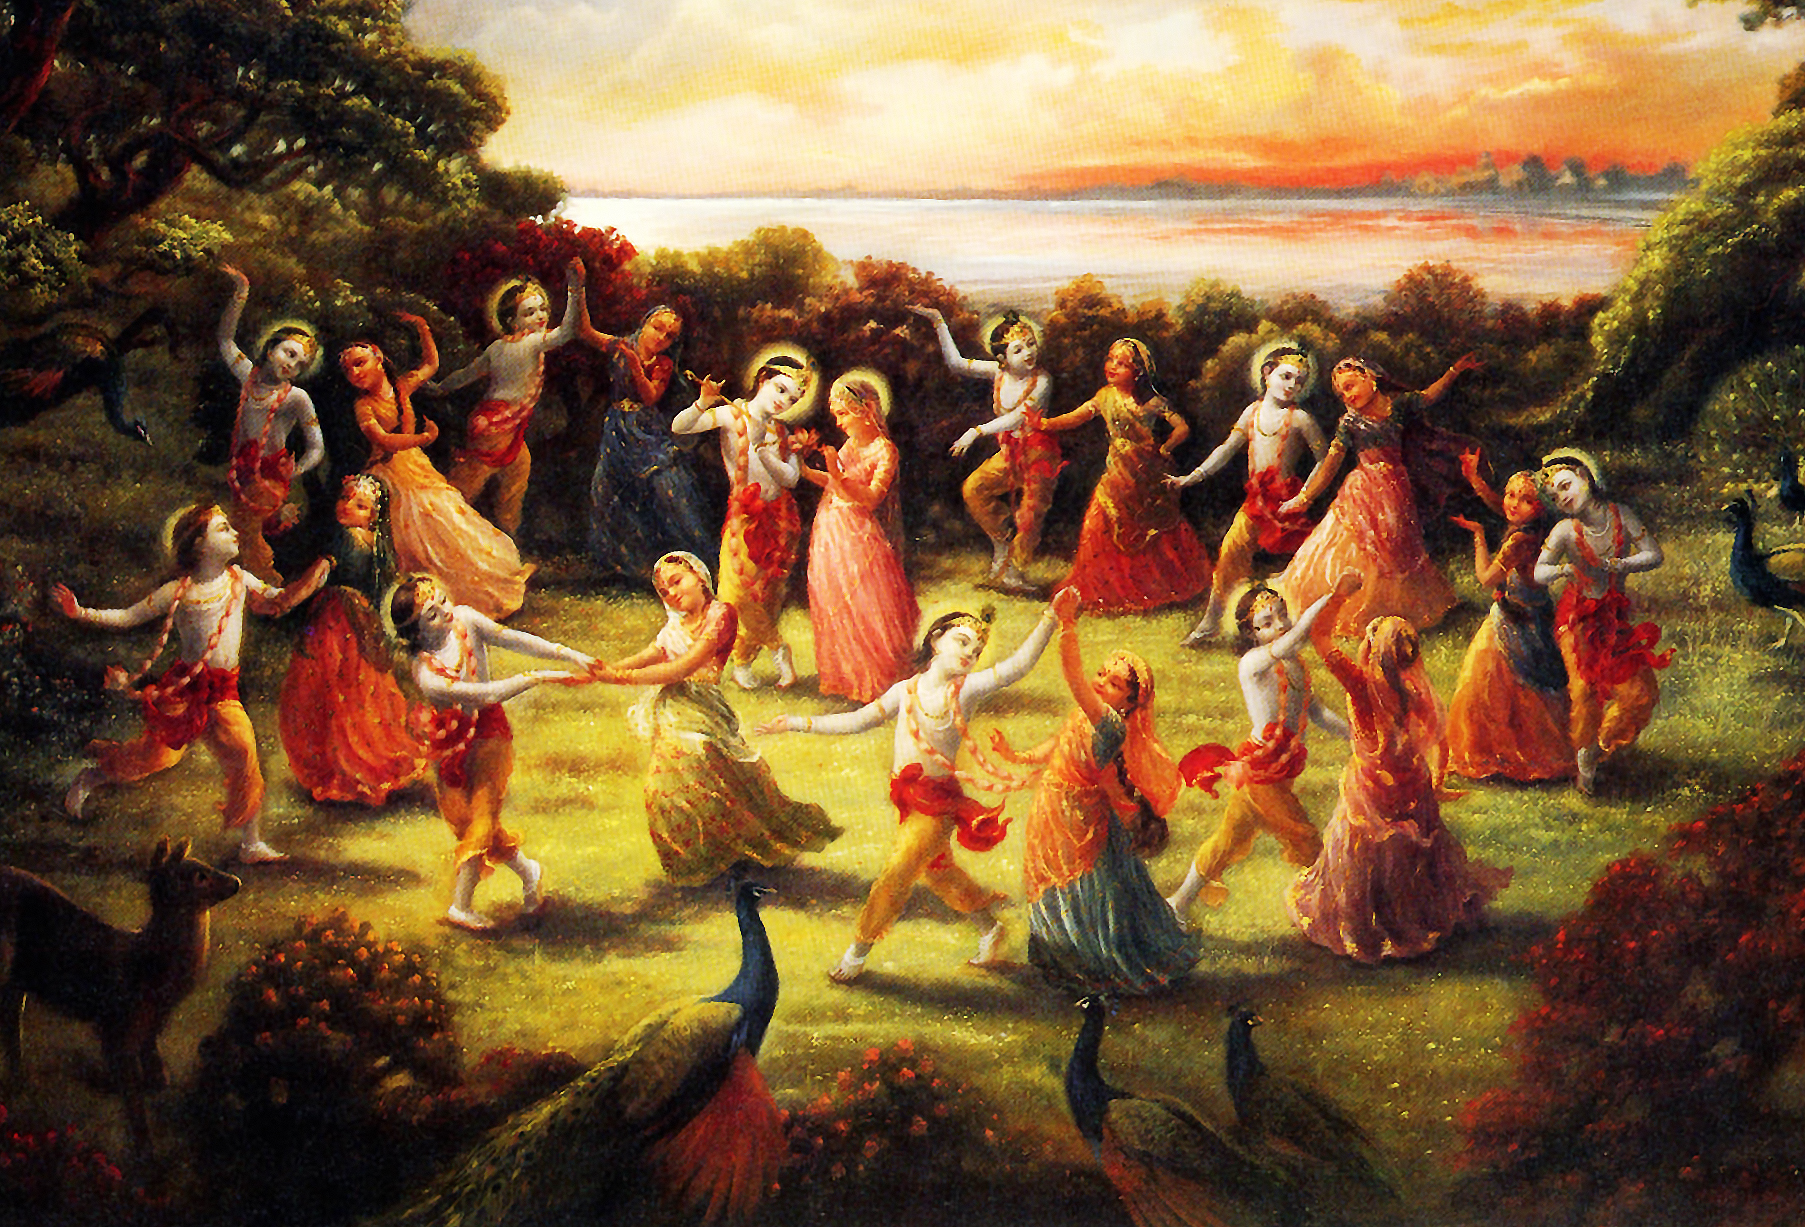 Rāsa Lilā through an Abrahamic Lens – A Modern Hindu Malady